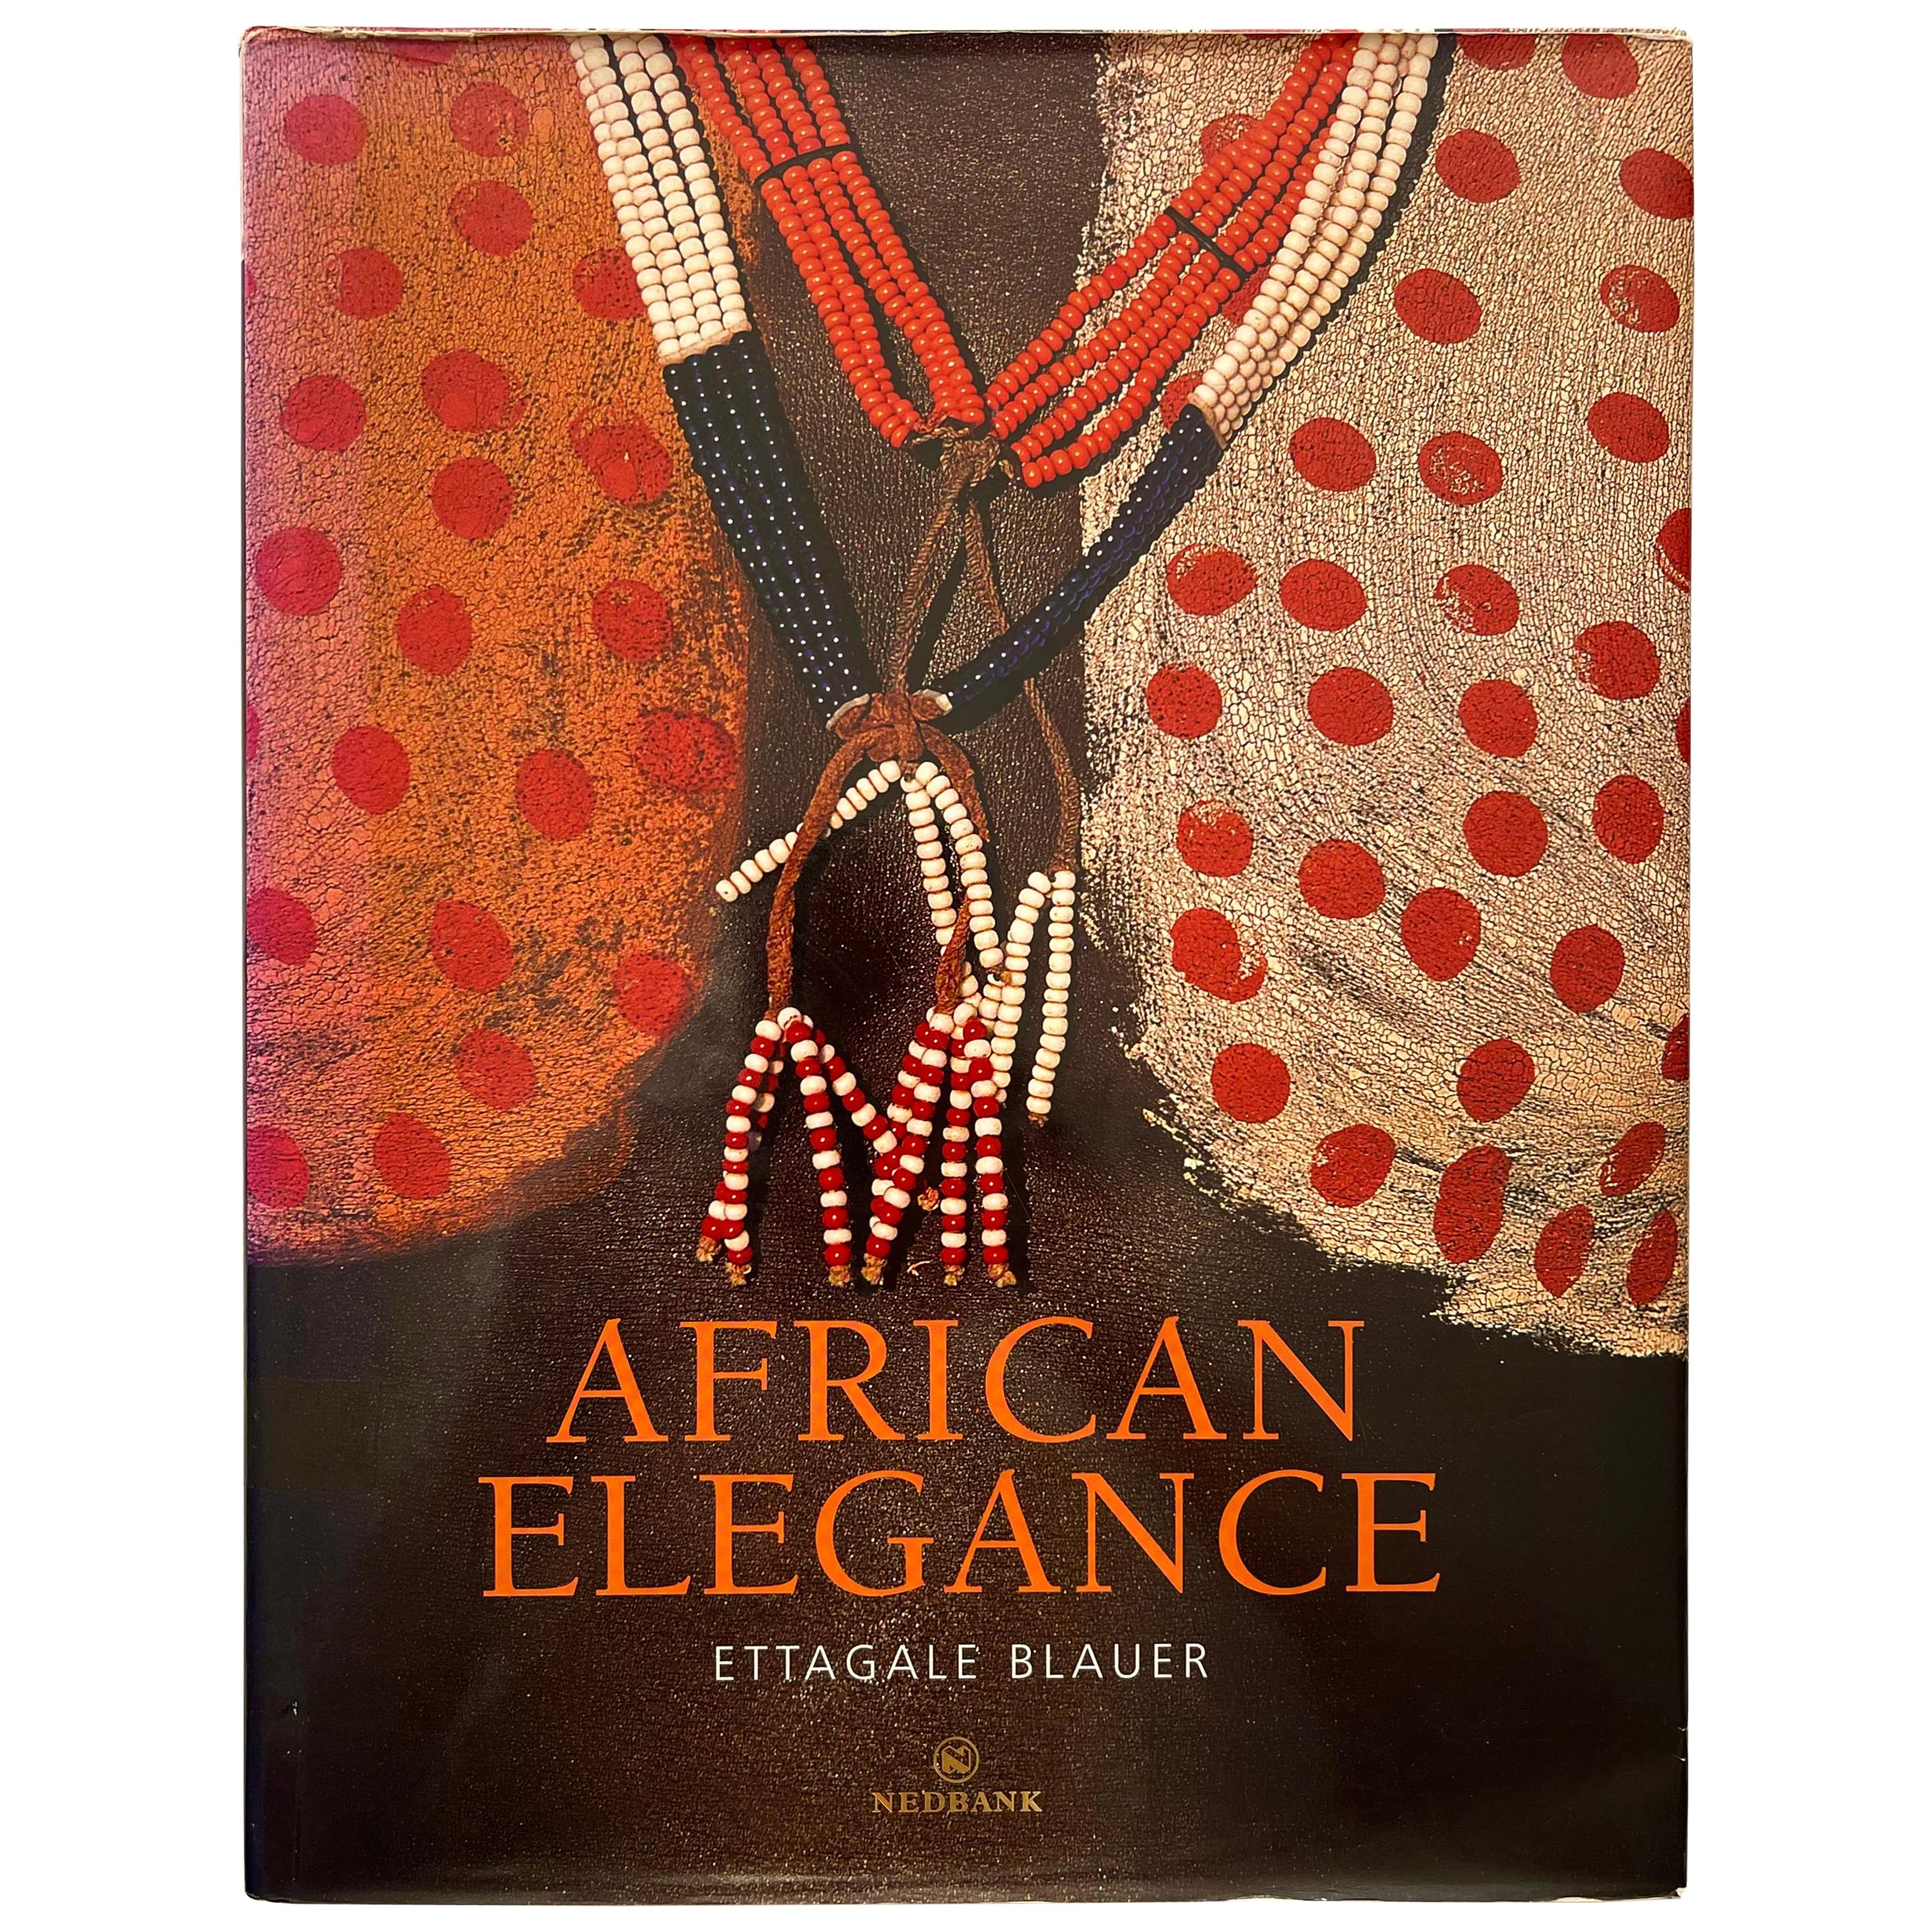 African Elegance by Ettagale Blauer 1999